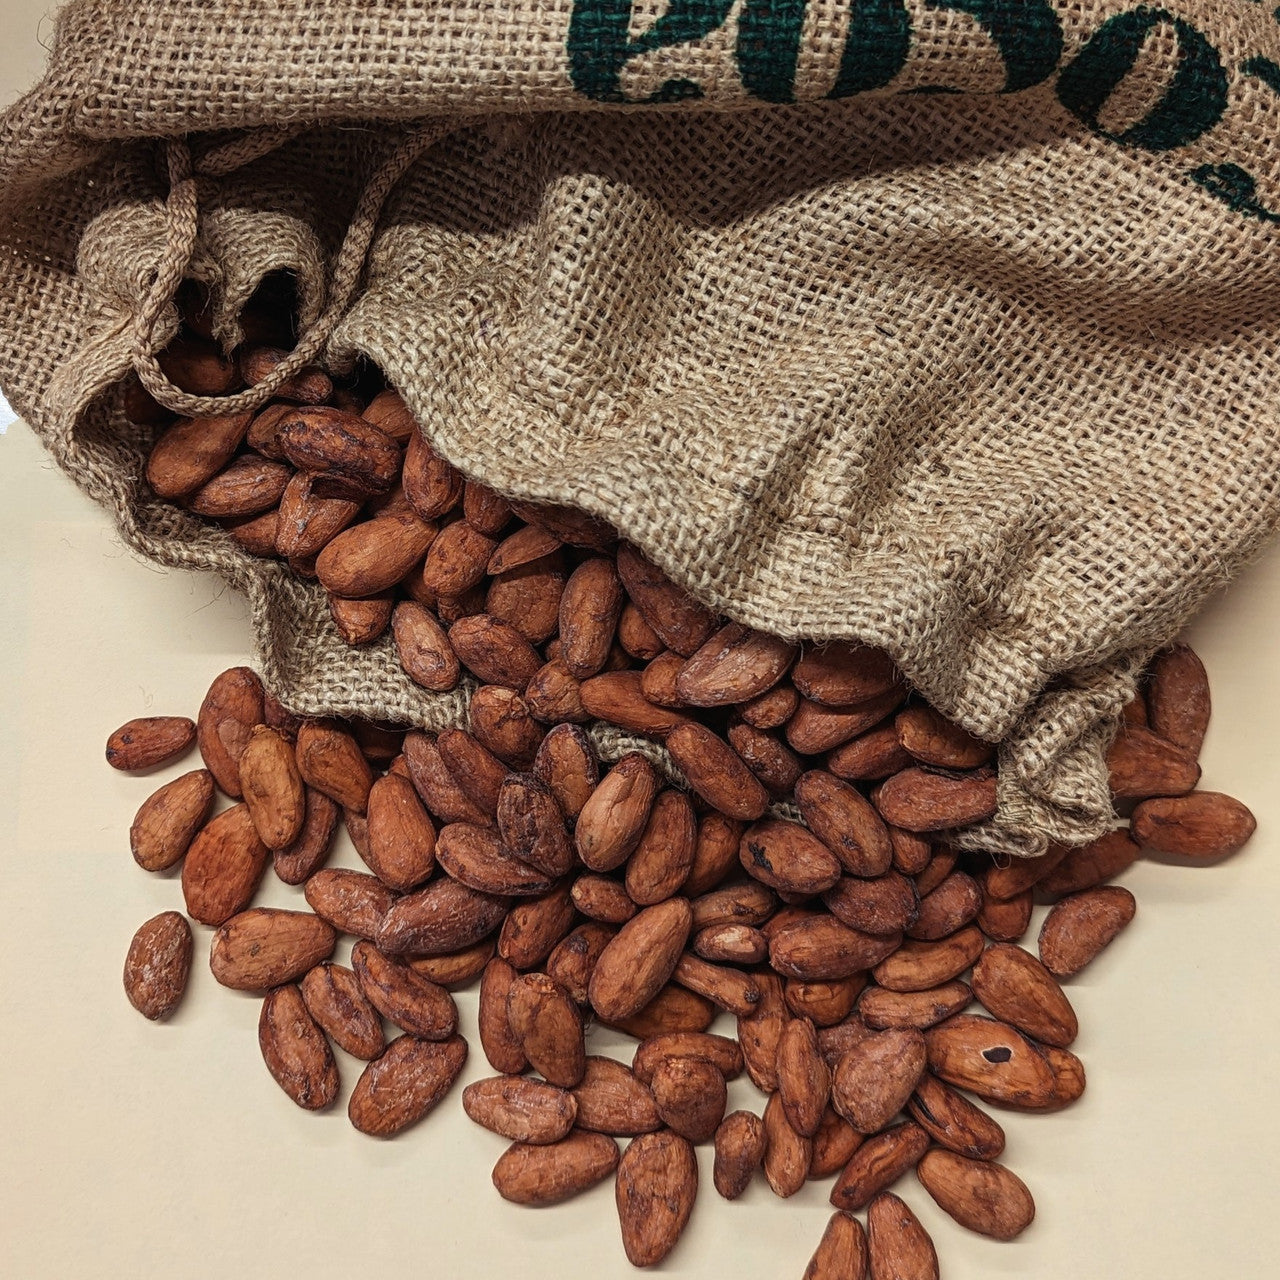 Hacienda Victoria Cacao Beans 20kg - Ecuadorian Single Plantation